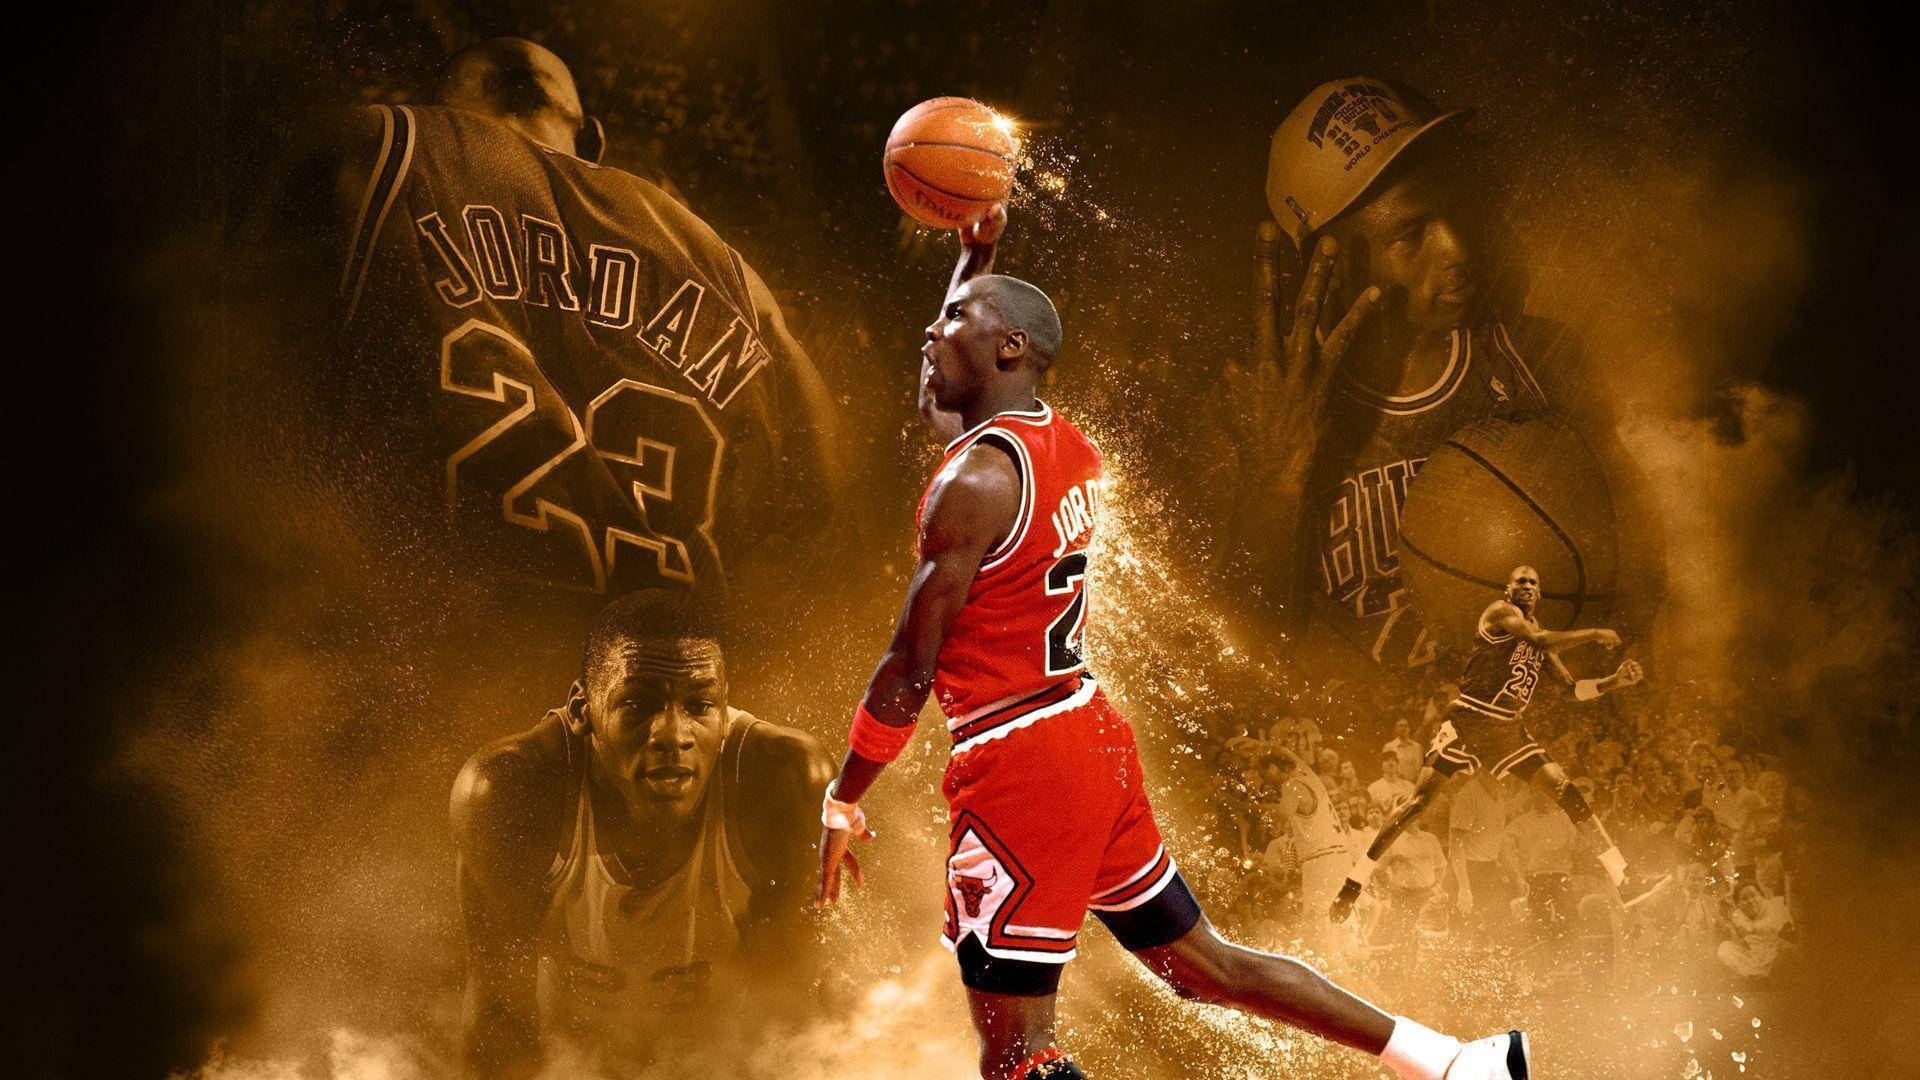 Atletalendário, #23 Michael Jordan Papel de Parede